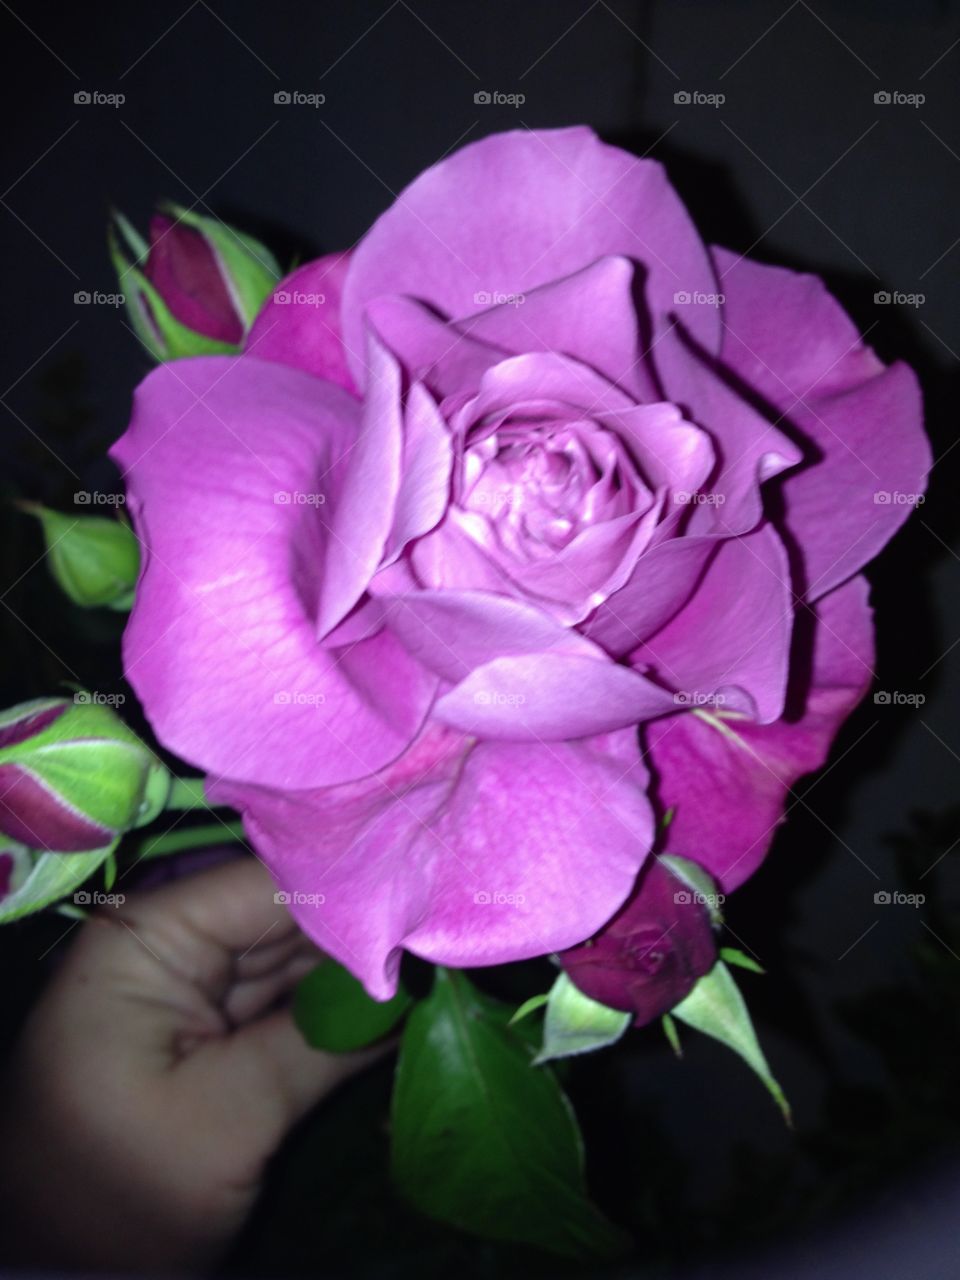 Flower, Rose, Love, Romance, Petal